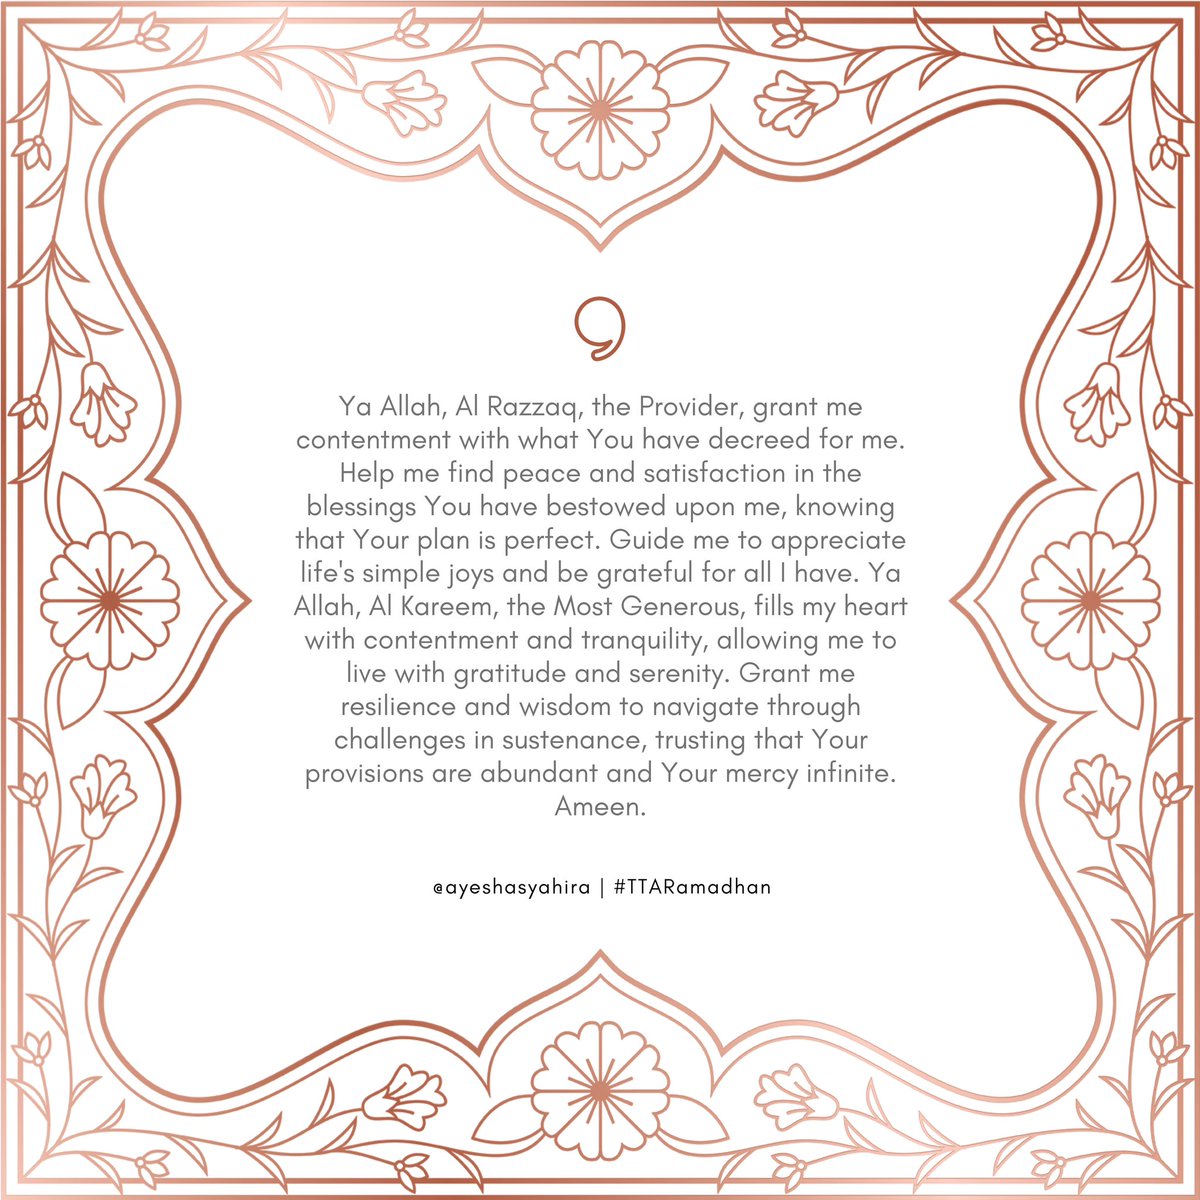 Ramadhan du’a day 10. #TTARamadhan